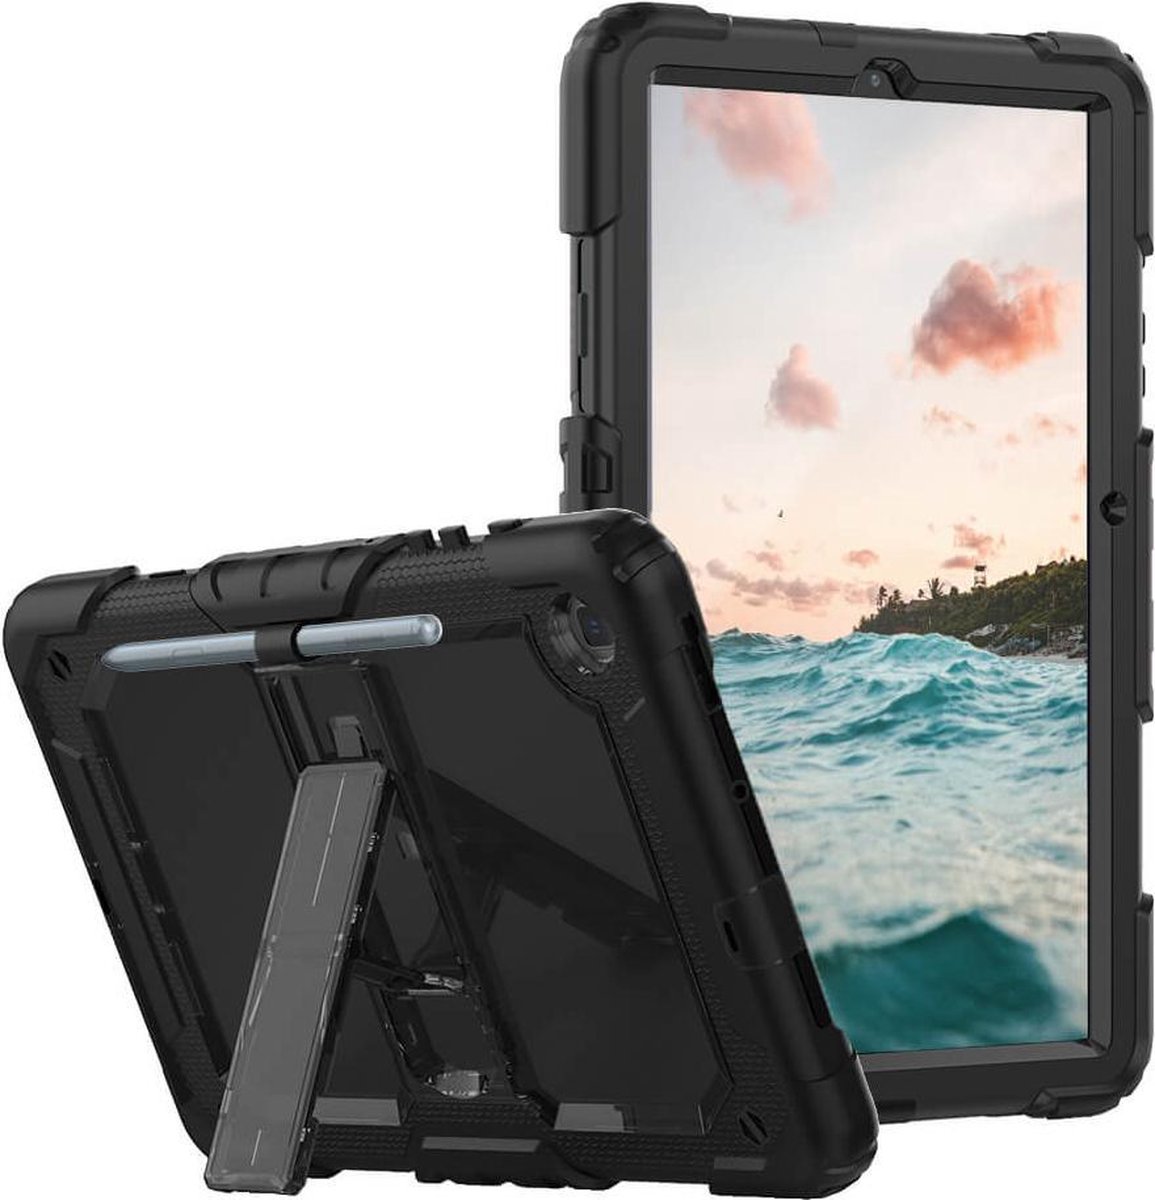 Casecentive Ultimate Hardcase Galaxy Tab S6 Lite 10.4 2020 zwart